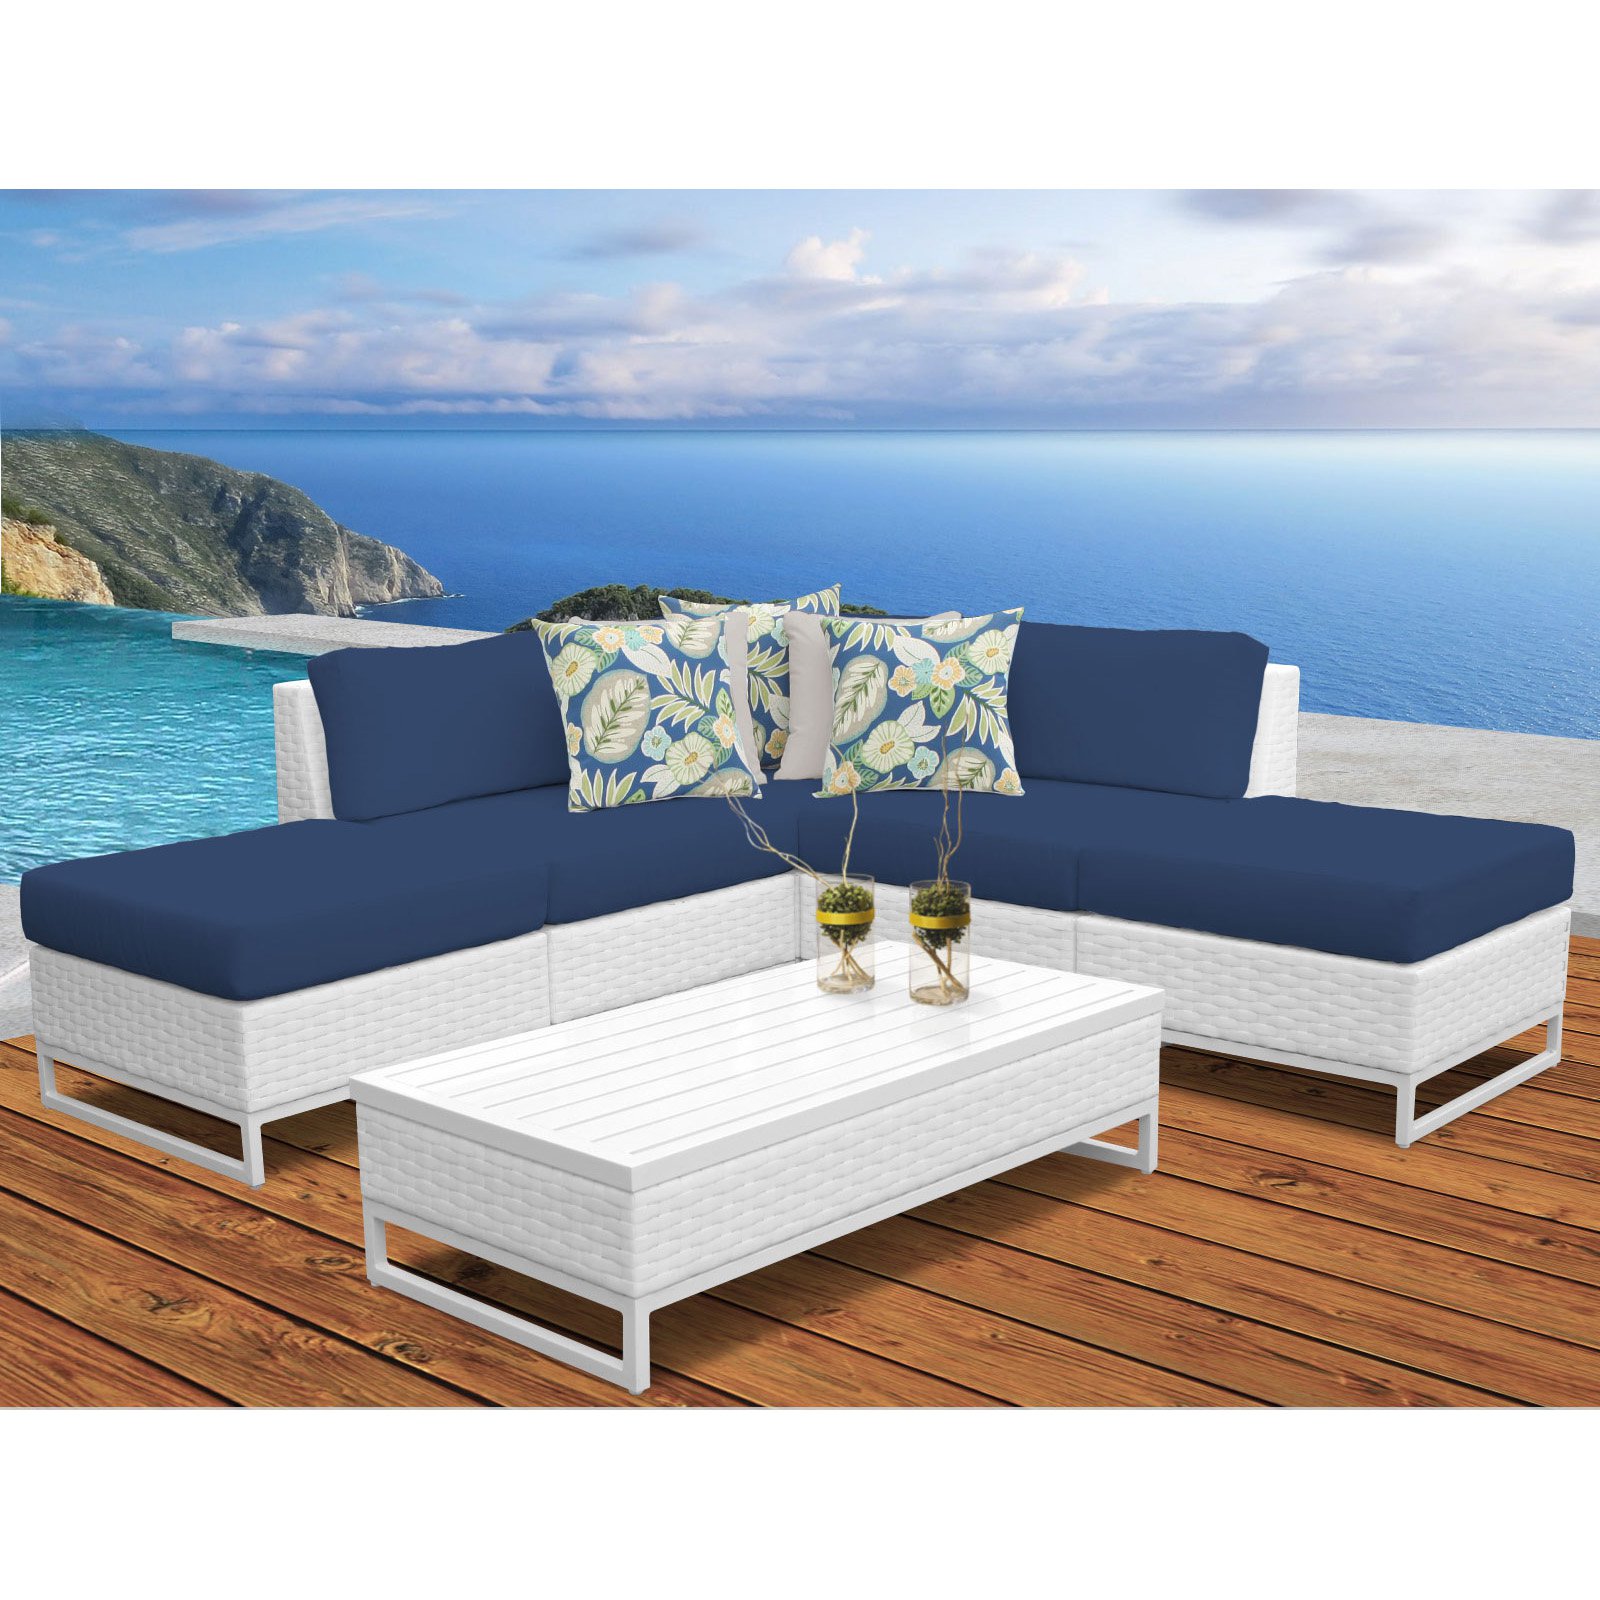 TK Classics Miami 6 Piece Outdoor Wicker Patio Furniture Set 06c - image 1 of 3